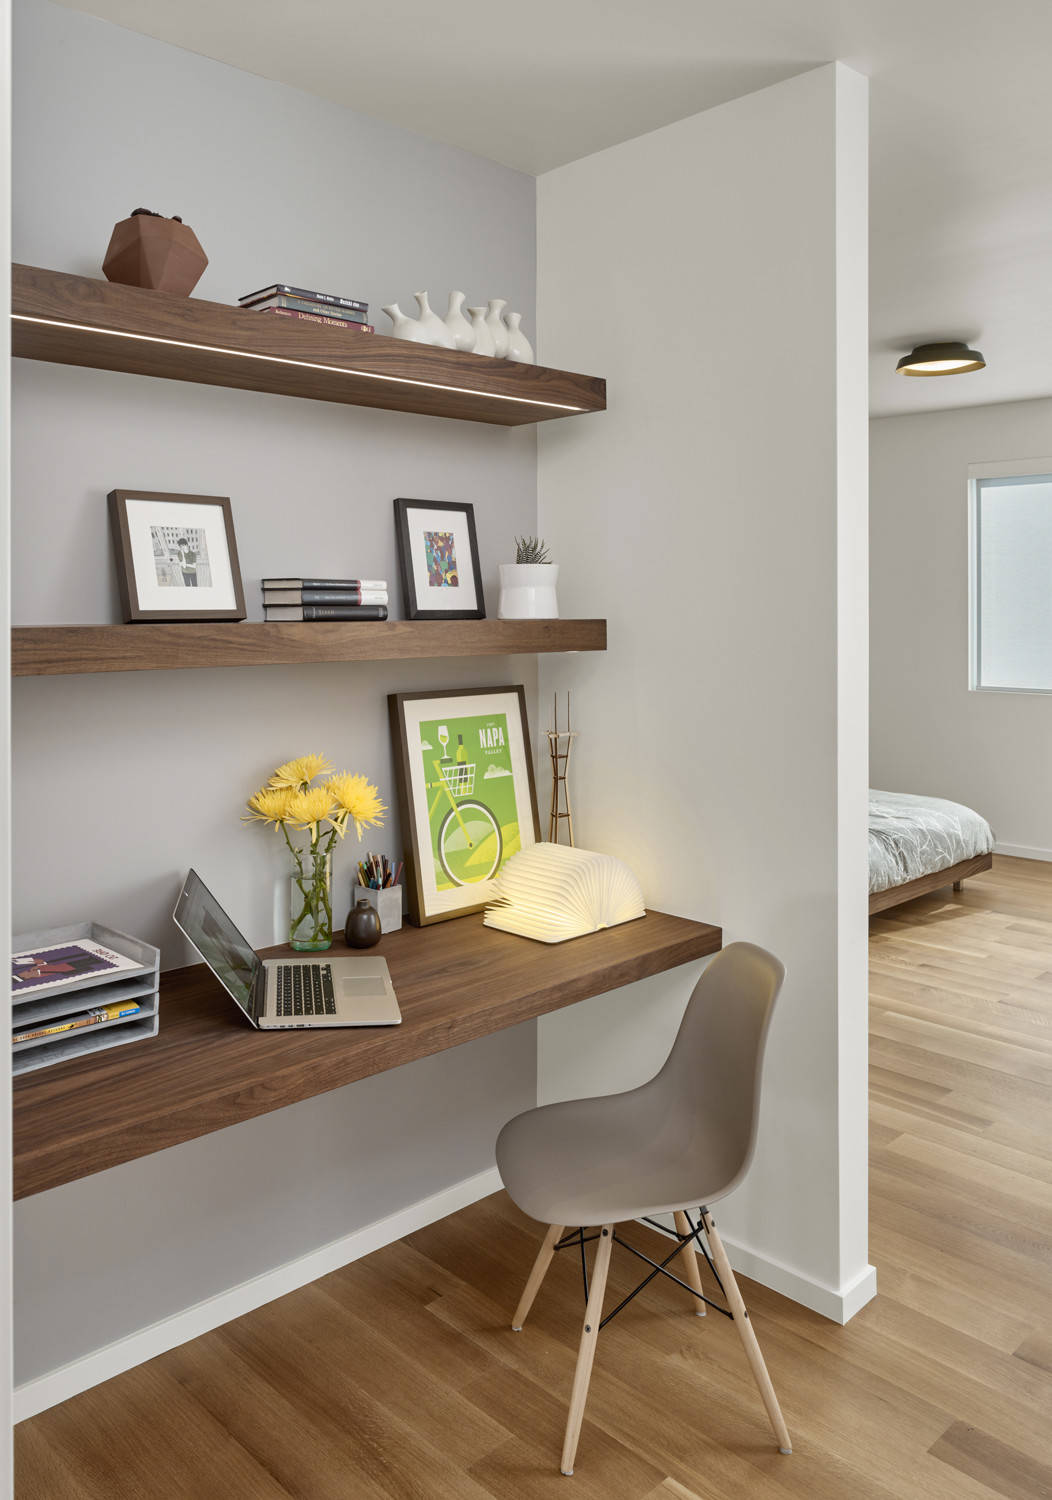 Simple Small Office Room Interior Design - pic-smidgen